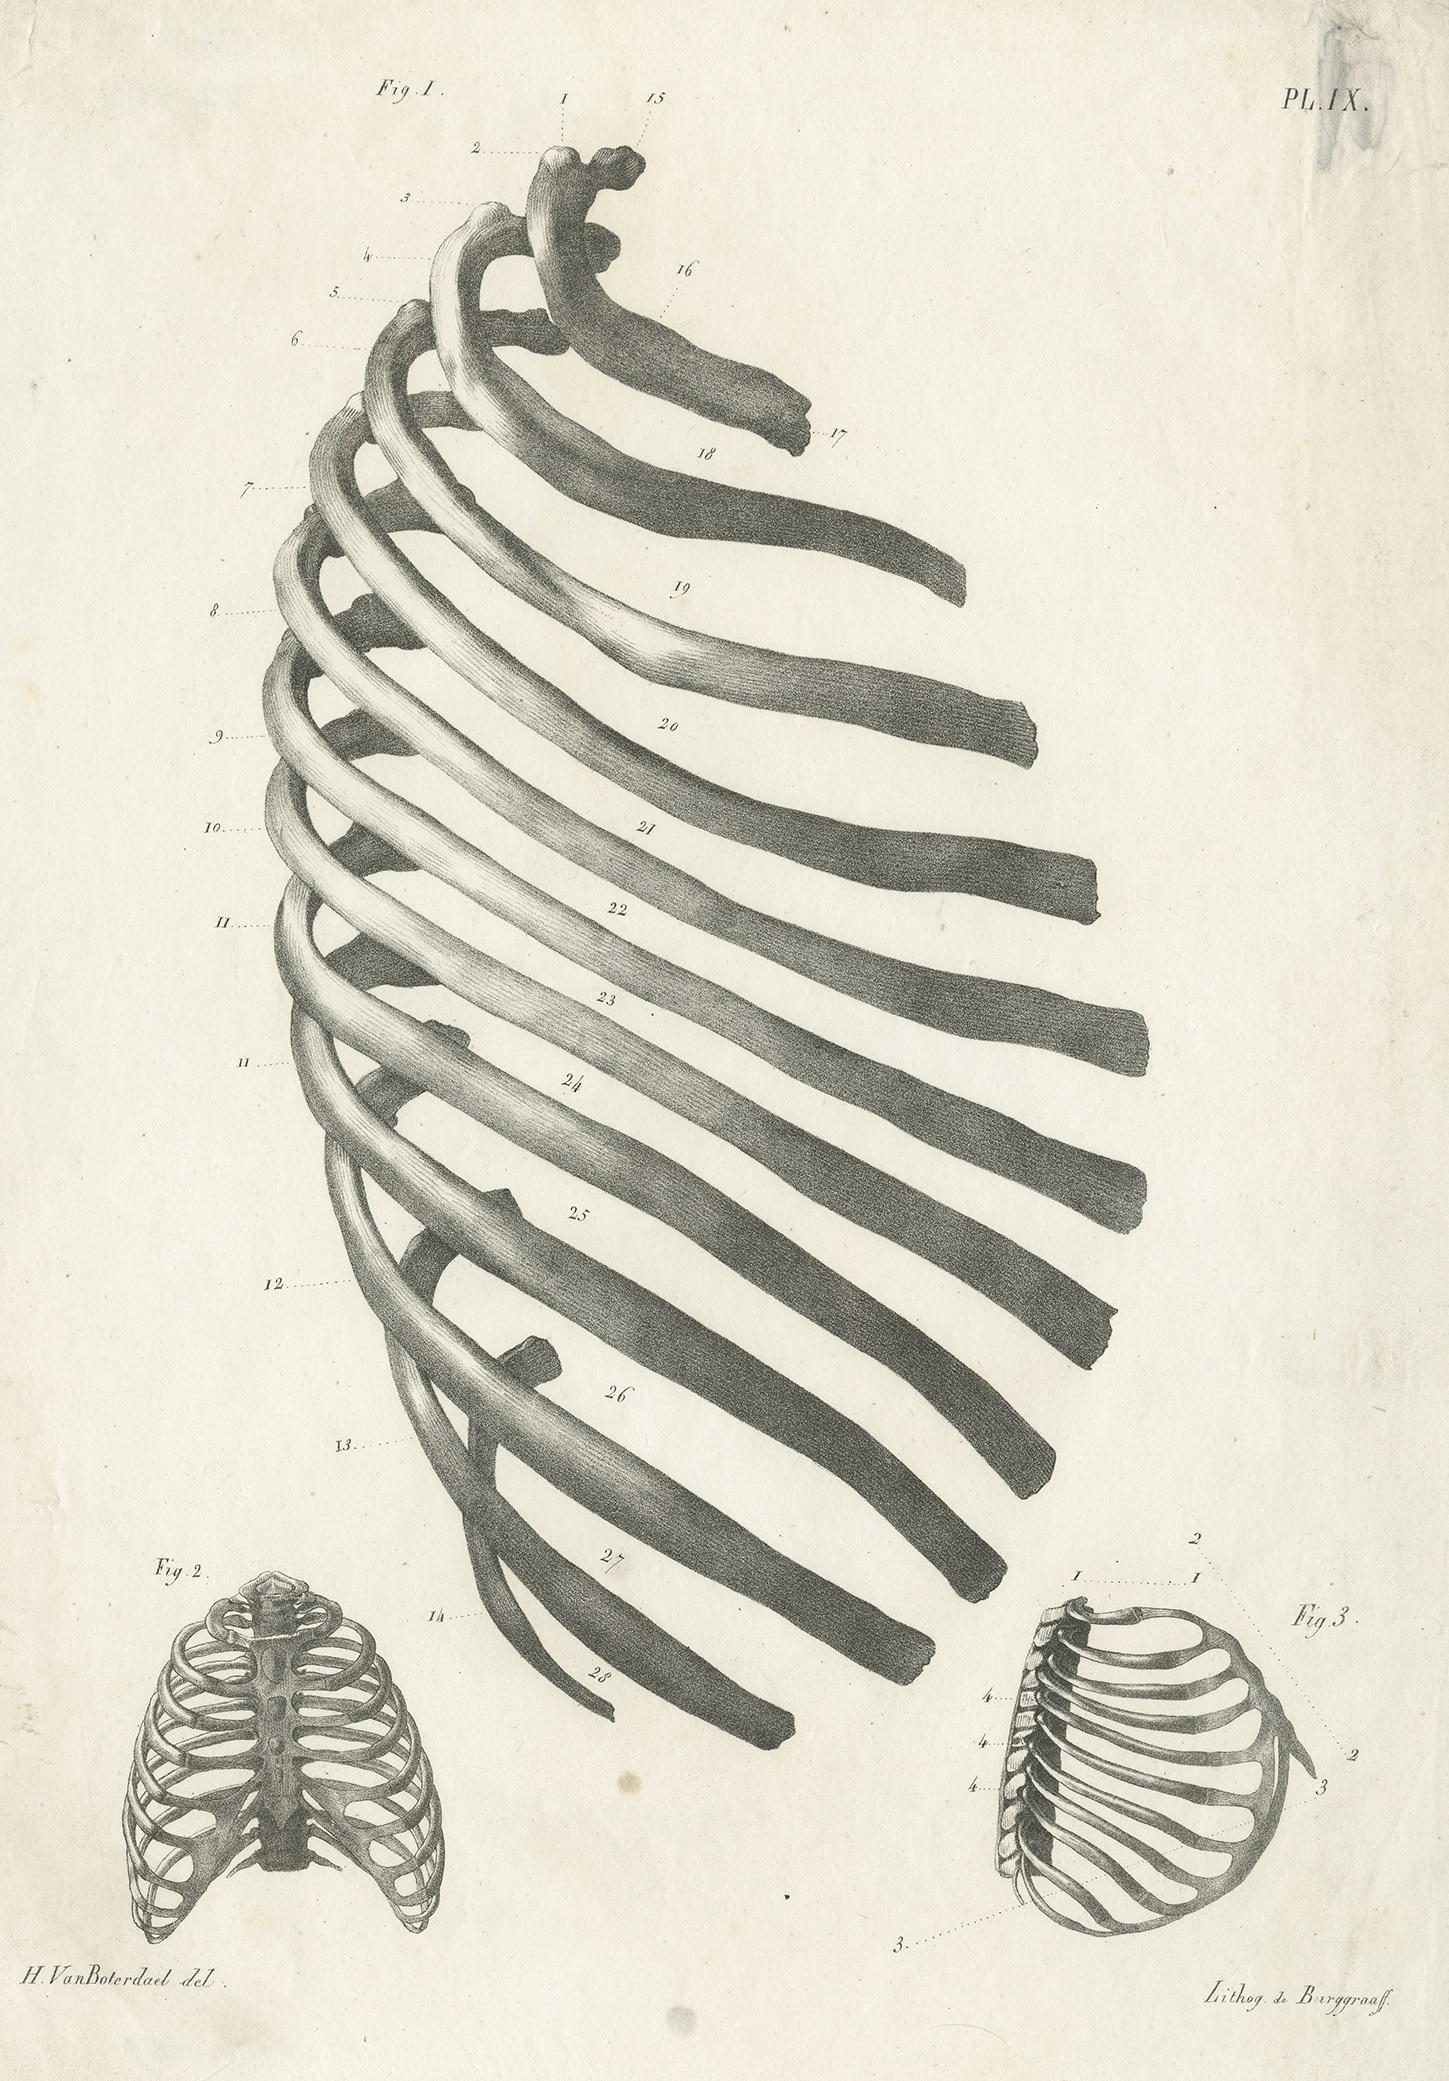 Antique anatomy print showing parts of the rib cage. This print originates from 'Anatomie De L'Homme Ou Descriptions Et figures Lithographiees De Toutes Les Parties Du Corps Humain', by Jules Cloquet. This work was published between 1821-1831 and